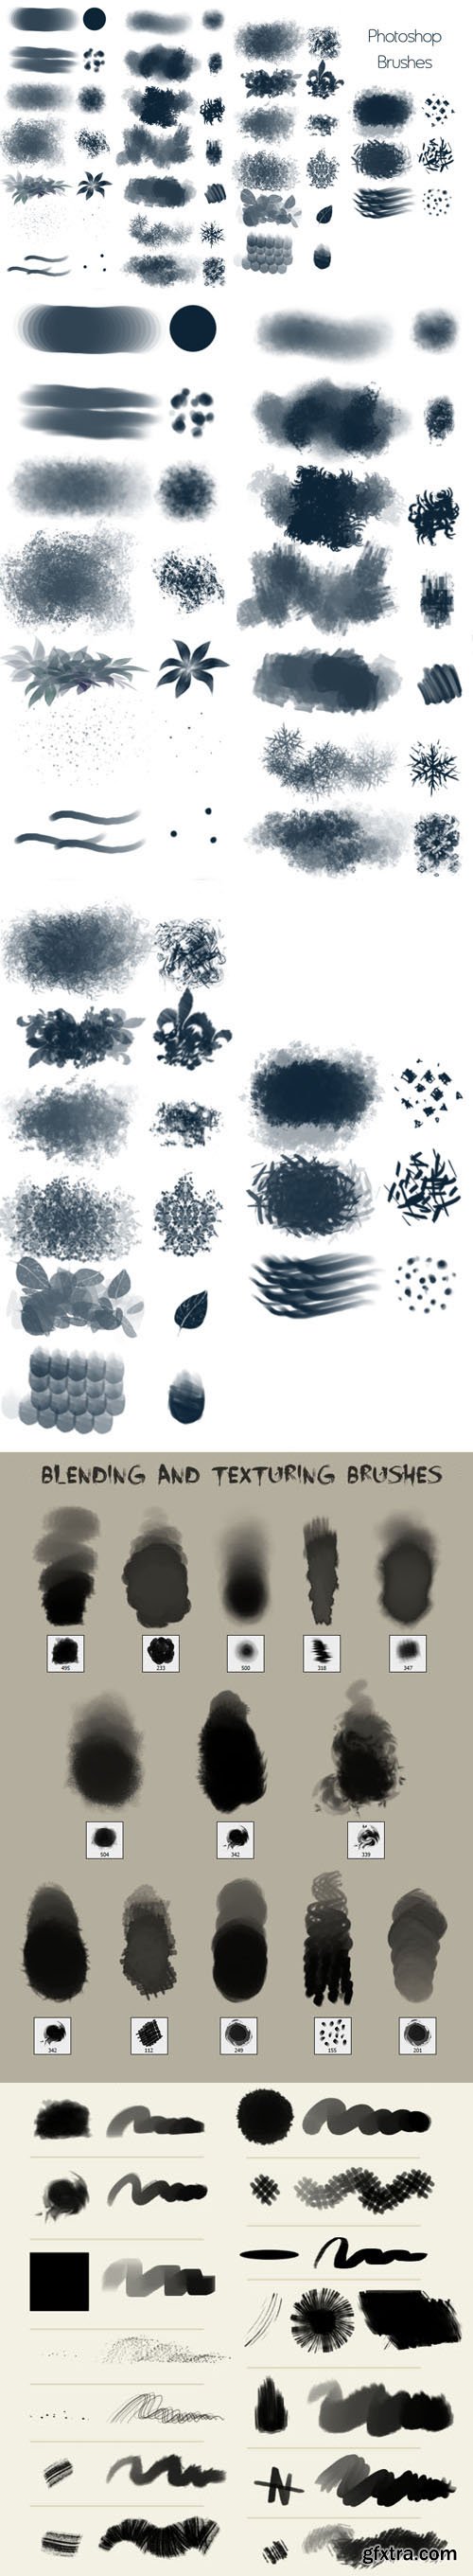 Blending & Texturing - 50 Photoshop Brushes Pack